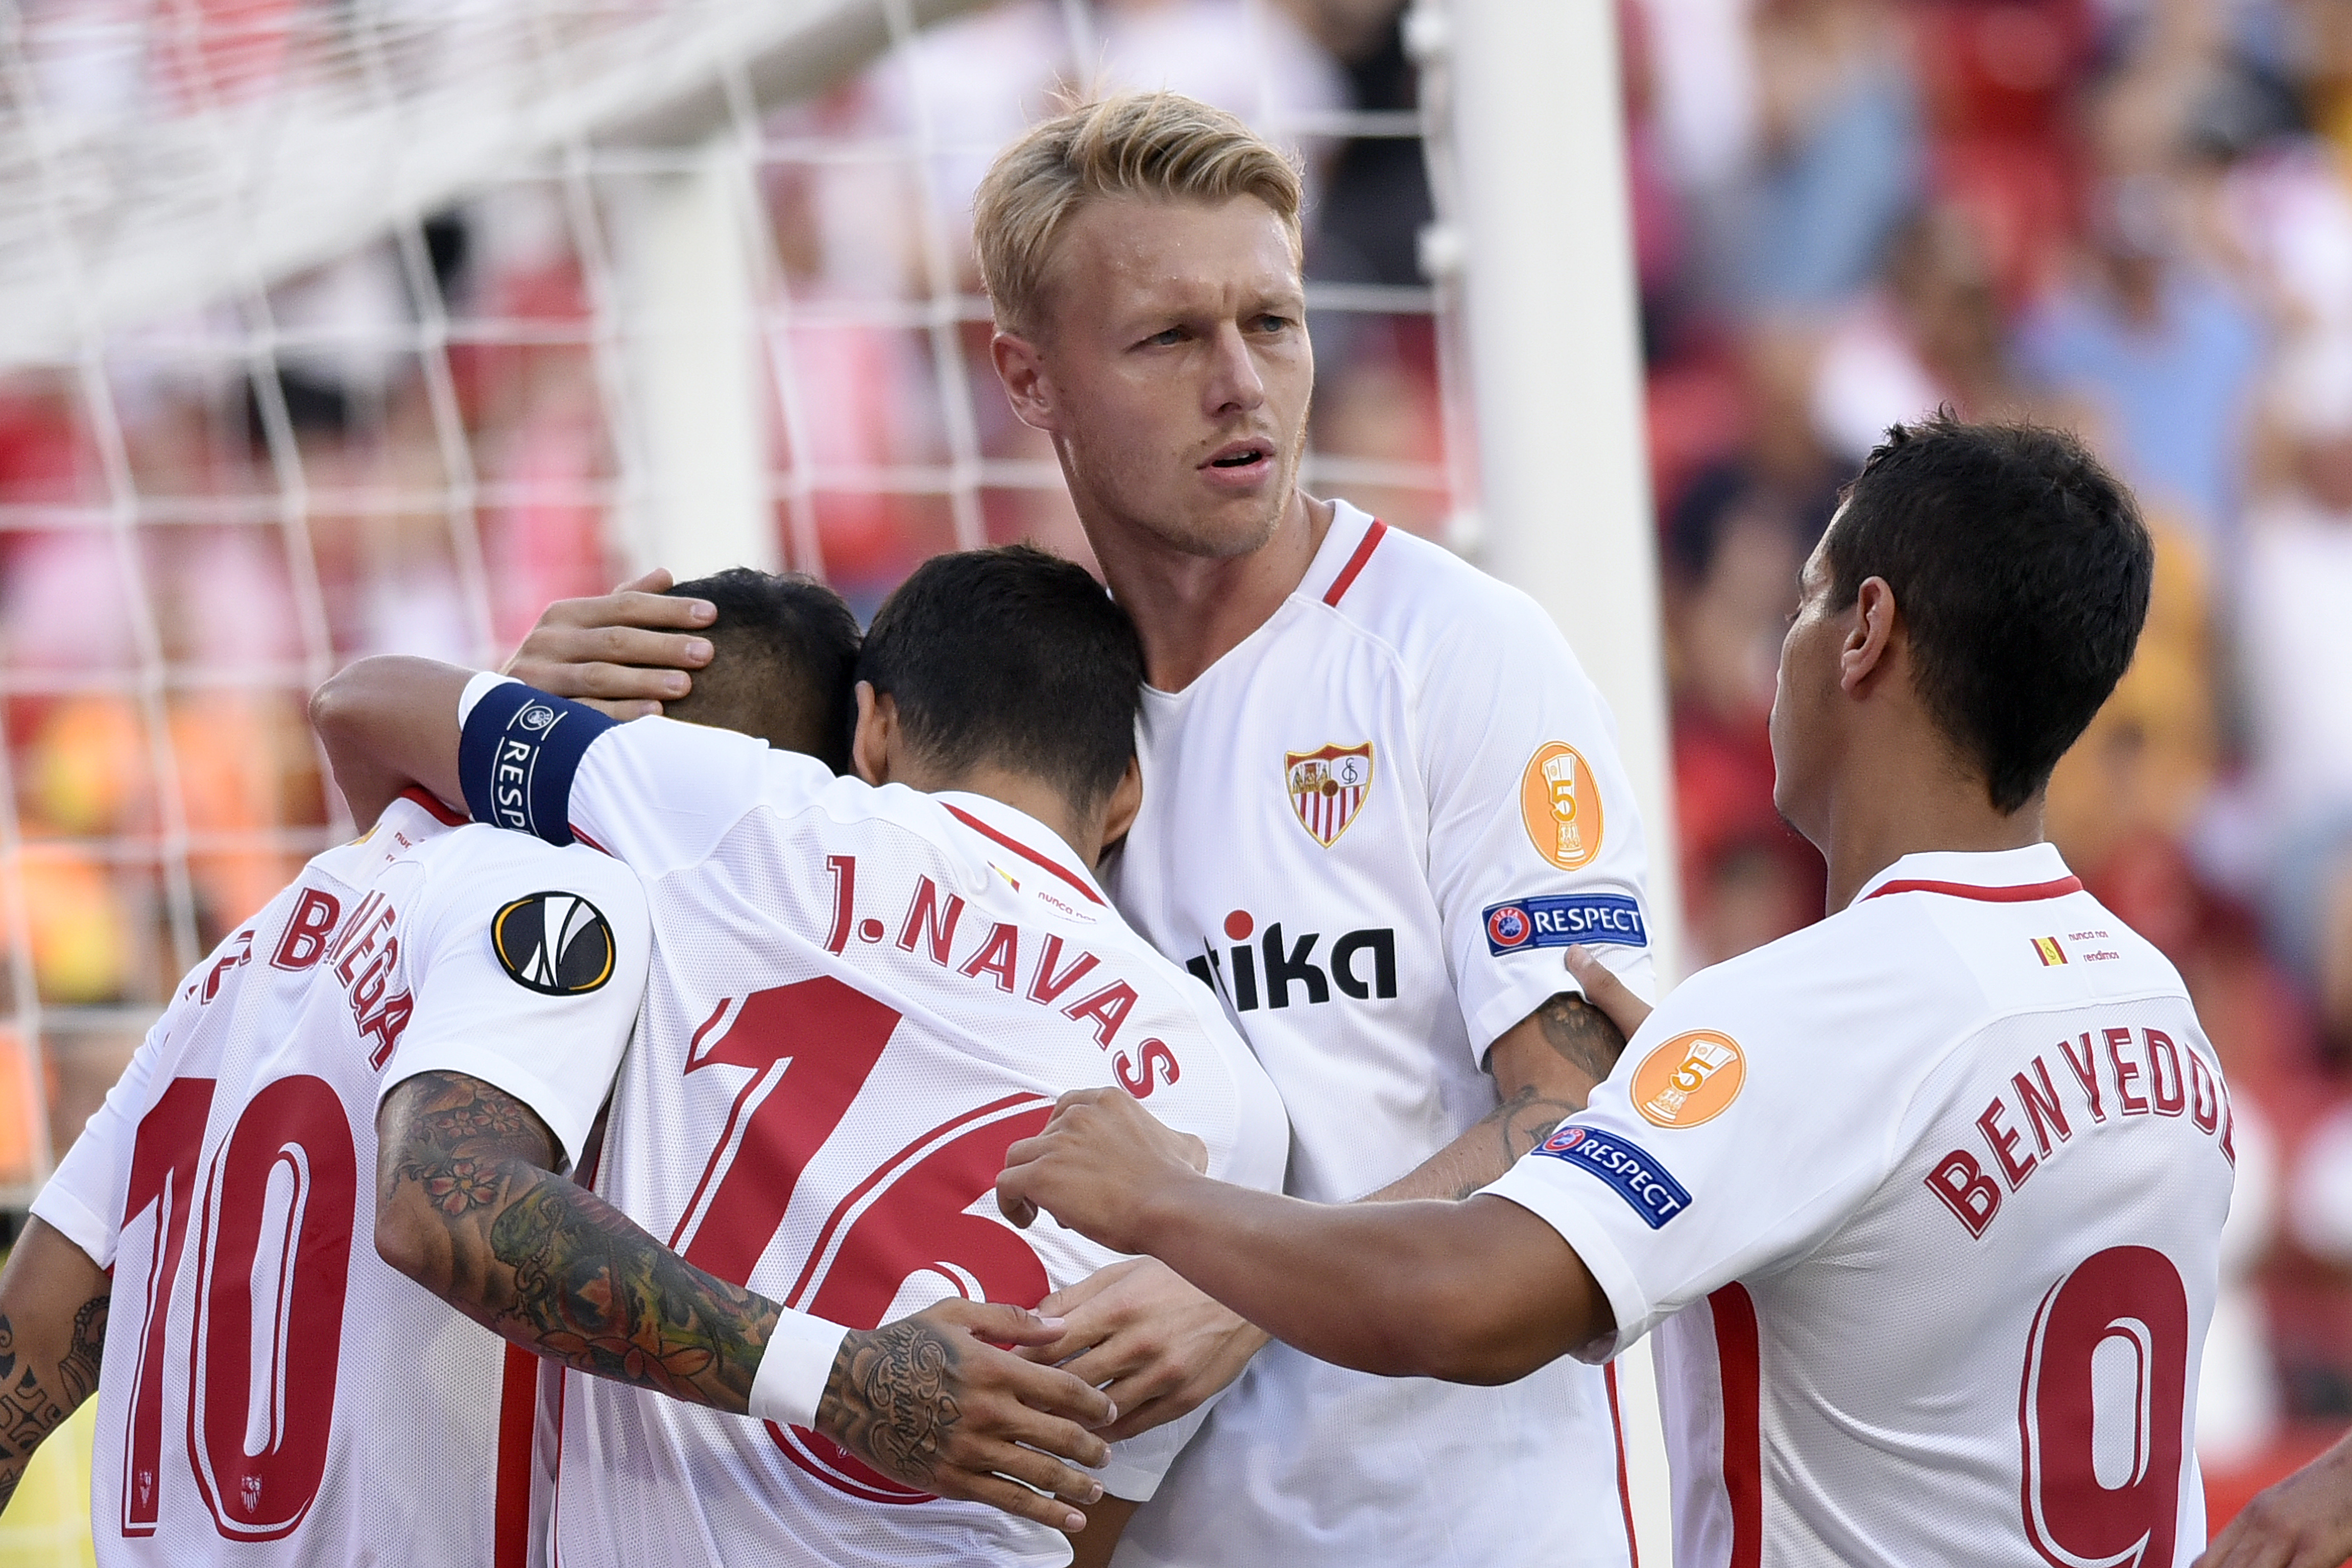 Sevilla FC celebrate a goal in the Europa League